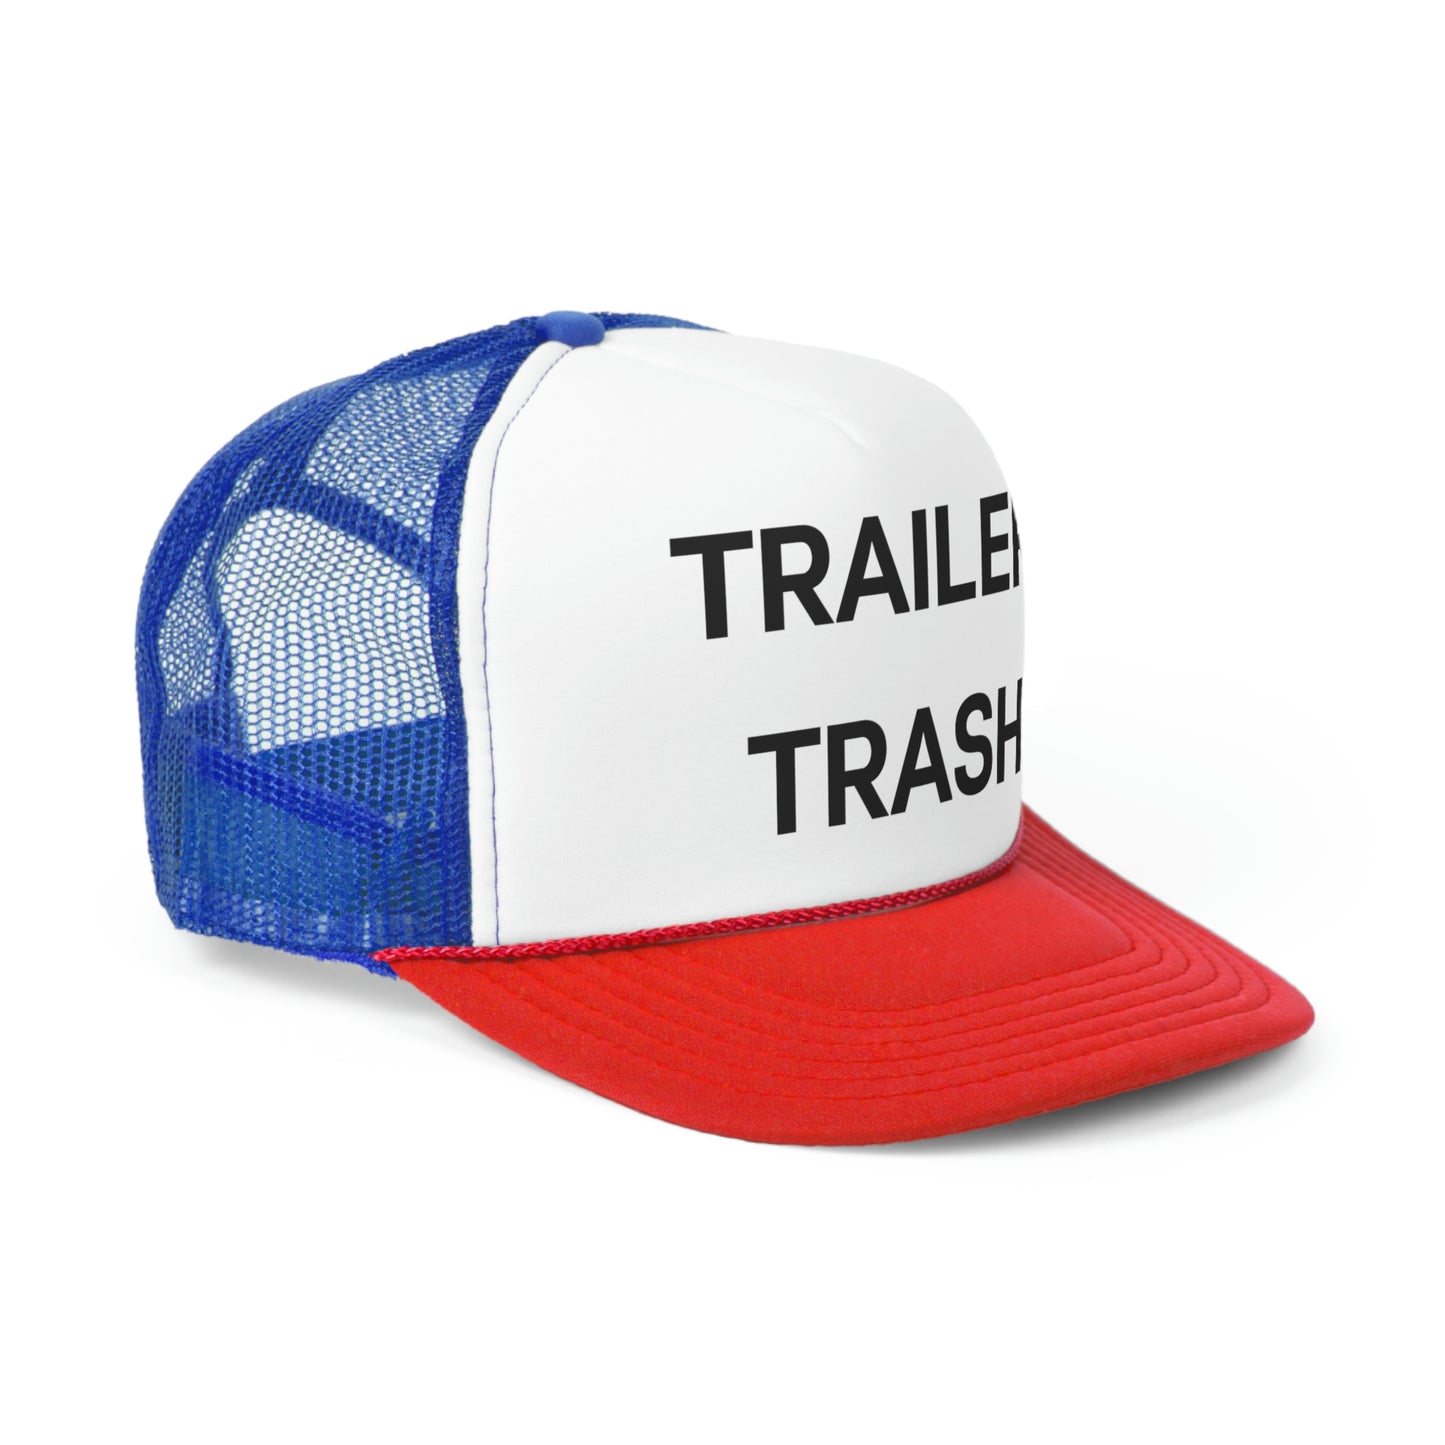 Trailer Trash